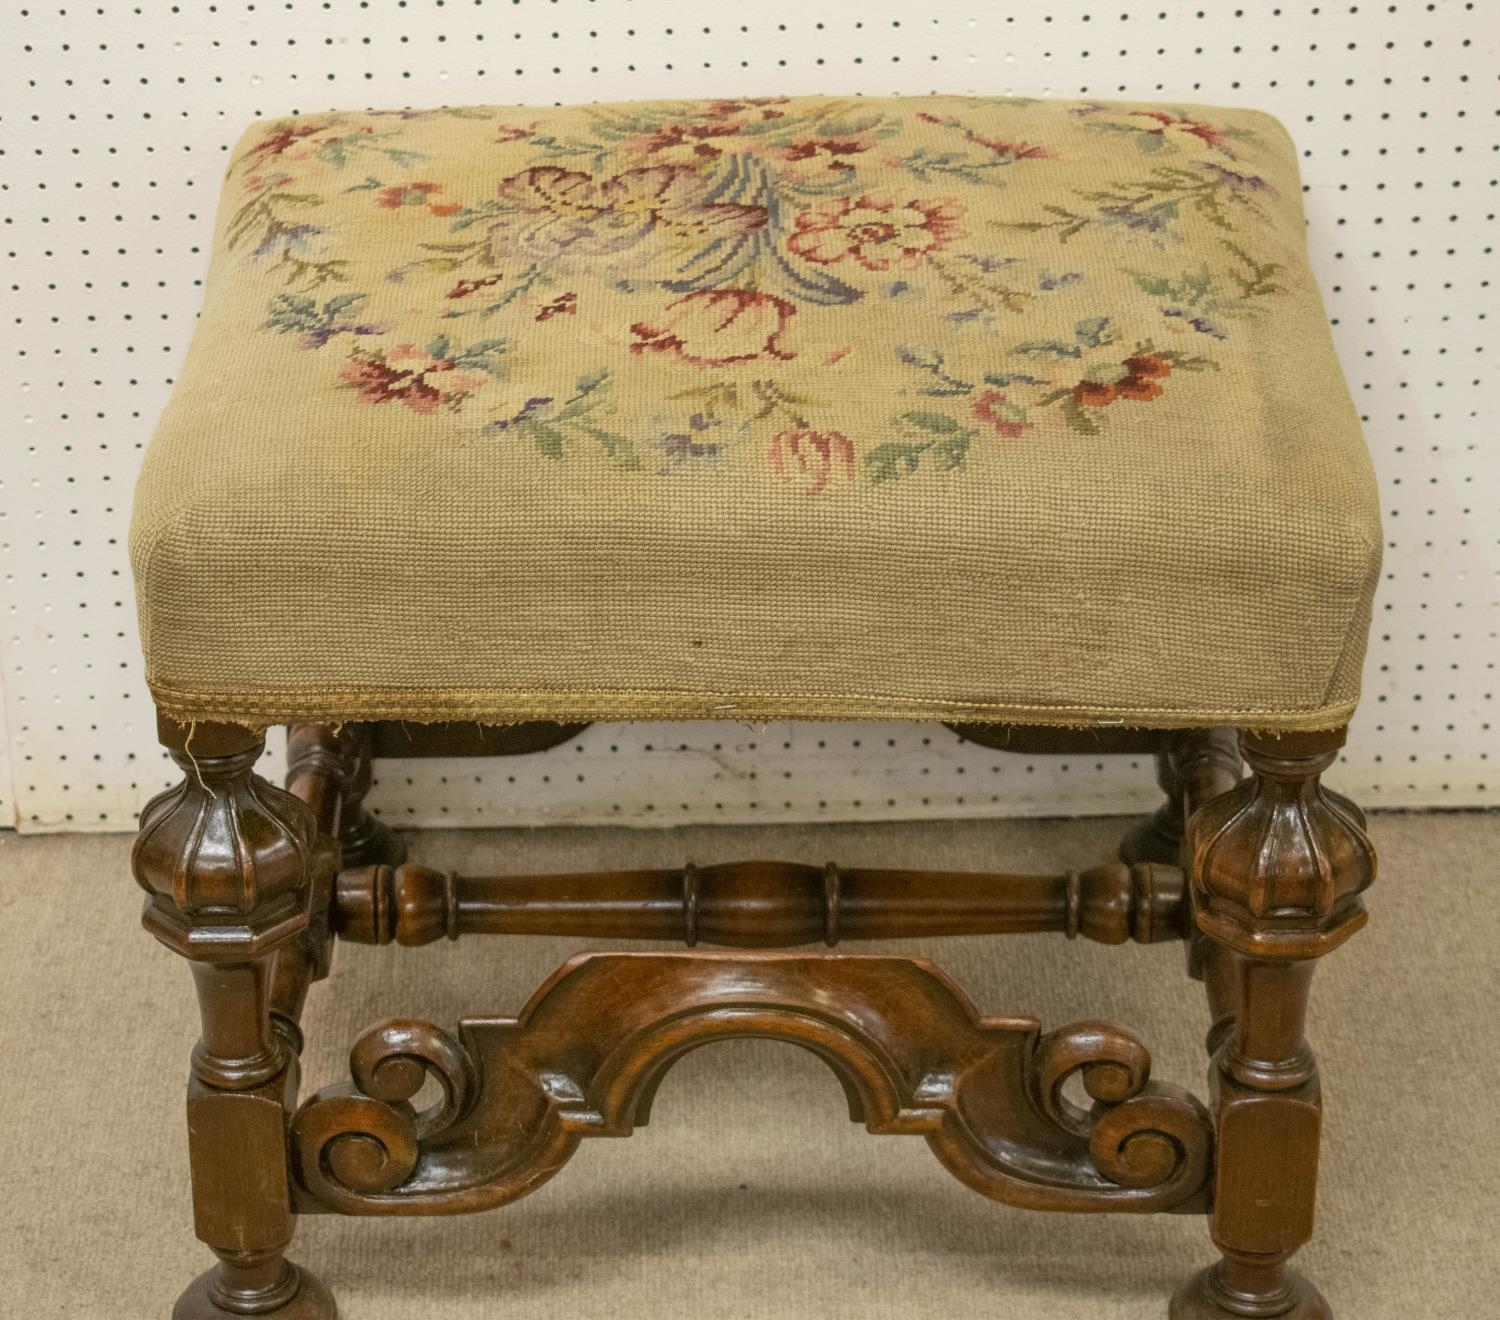 STOOL, 45cm H x 53cm x 47cm, late 19th century William & Mary style walnut with needlework - Image 2 of 5